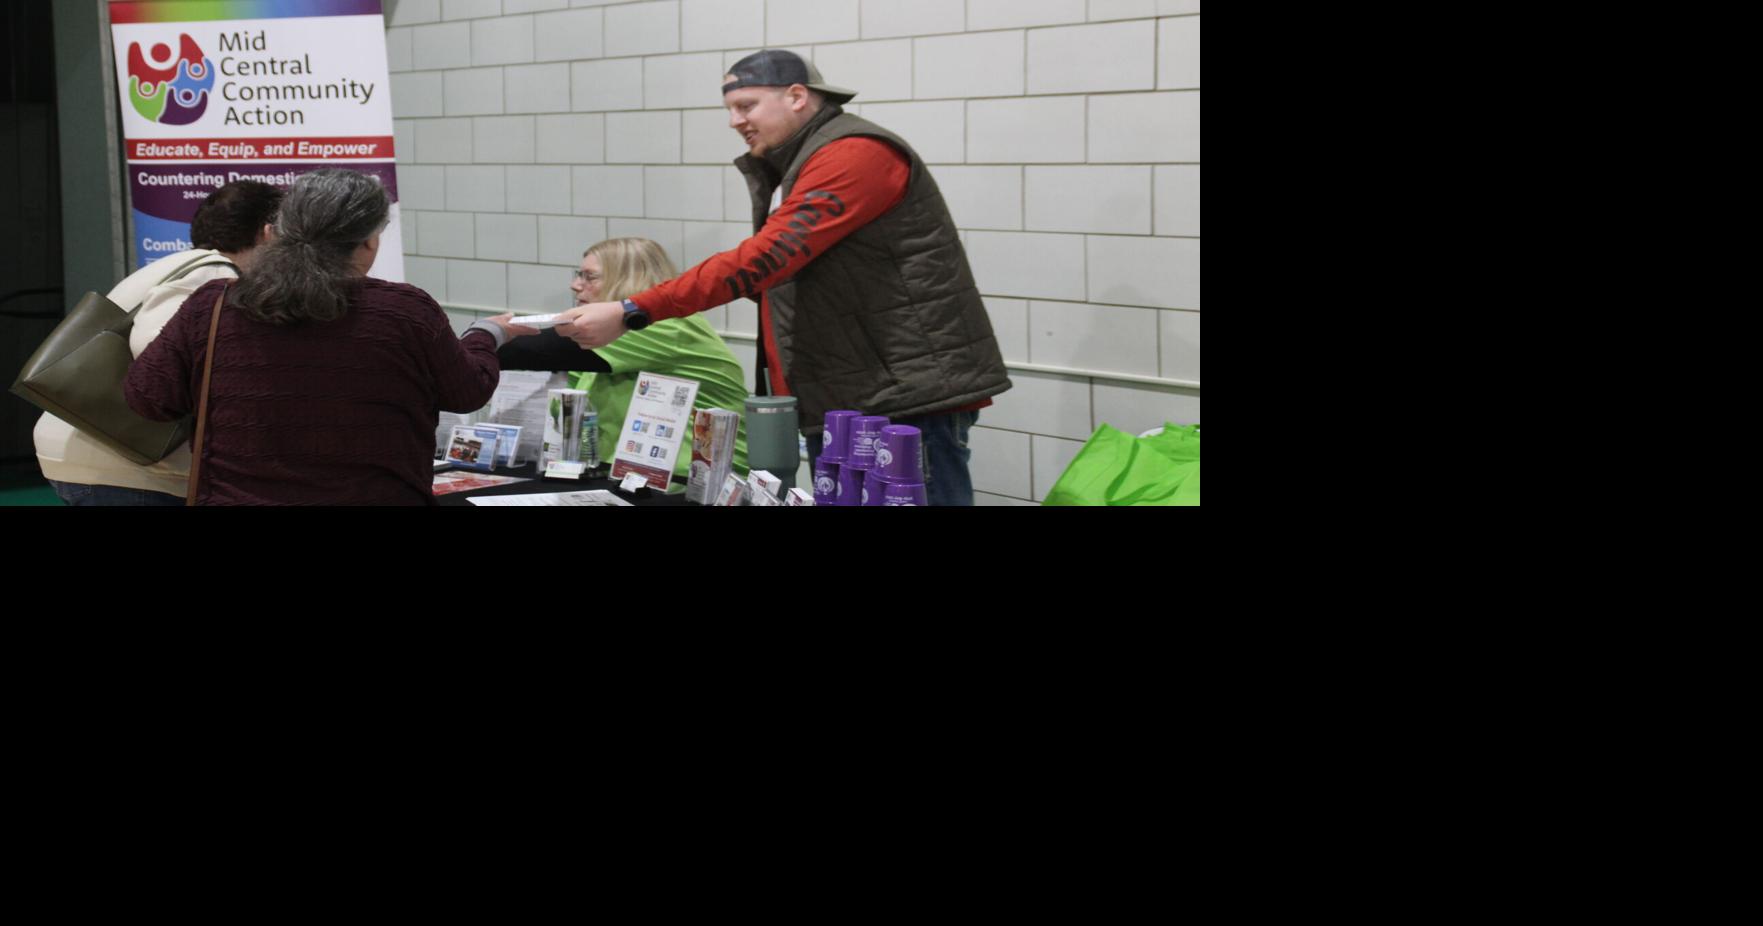 Bloomington fair housing event unites public with community resources